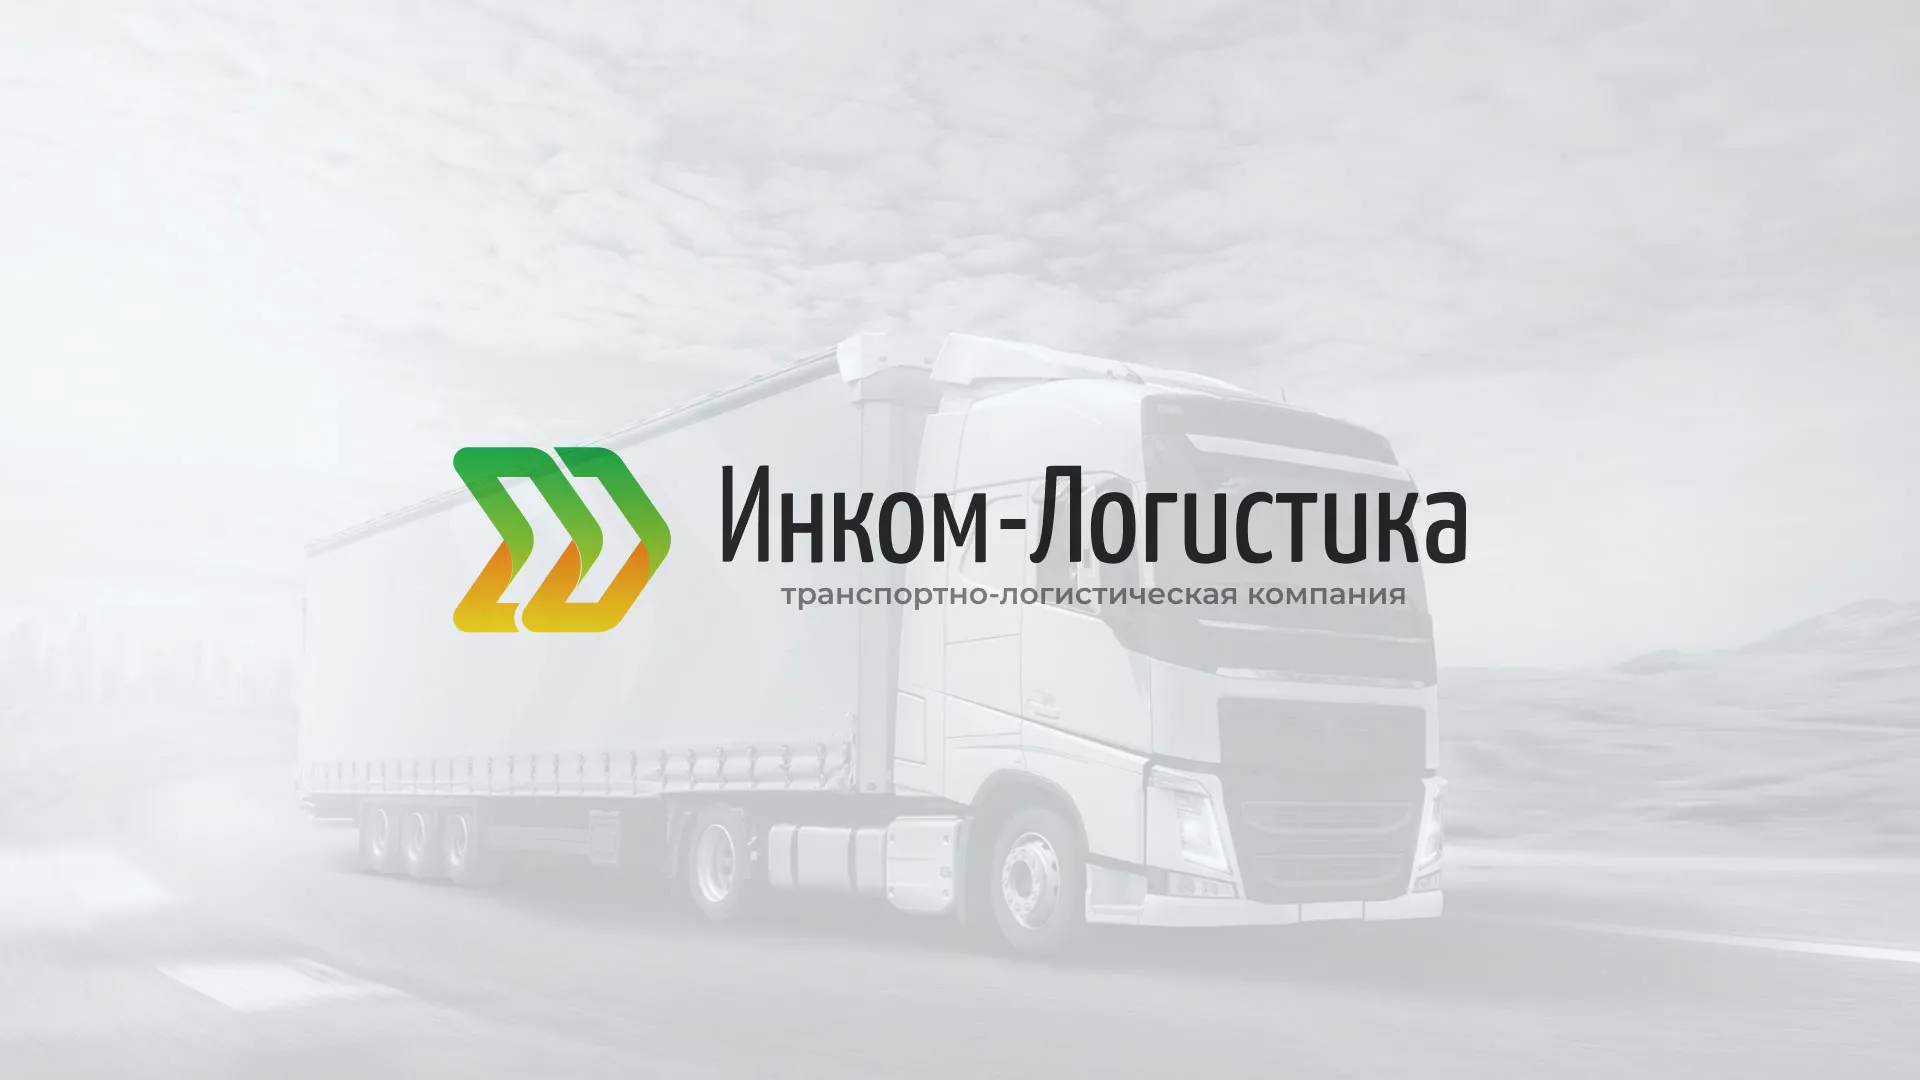 Разработка логотипа и сайта компании «Инком-Логистика» в Вятских Полянах